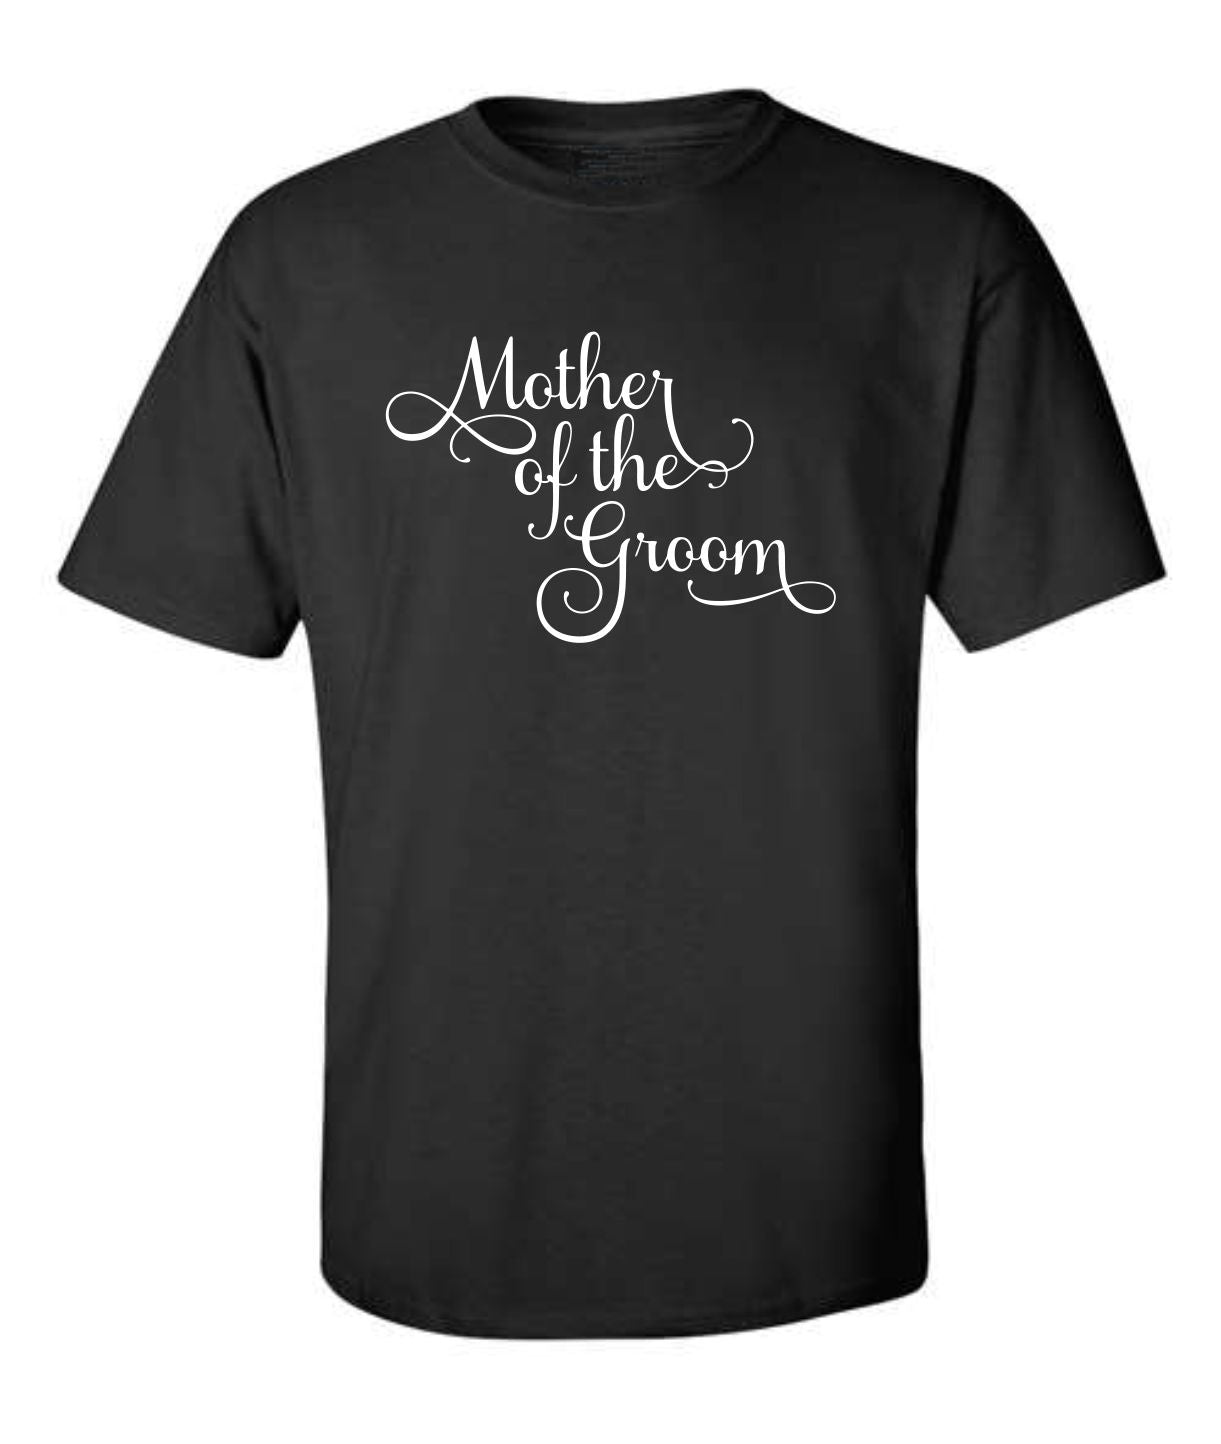 "Mother of the Groom" (Swirl Design) T-Shirt